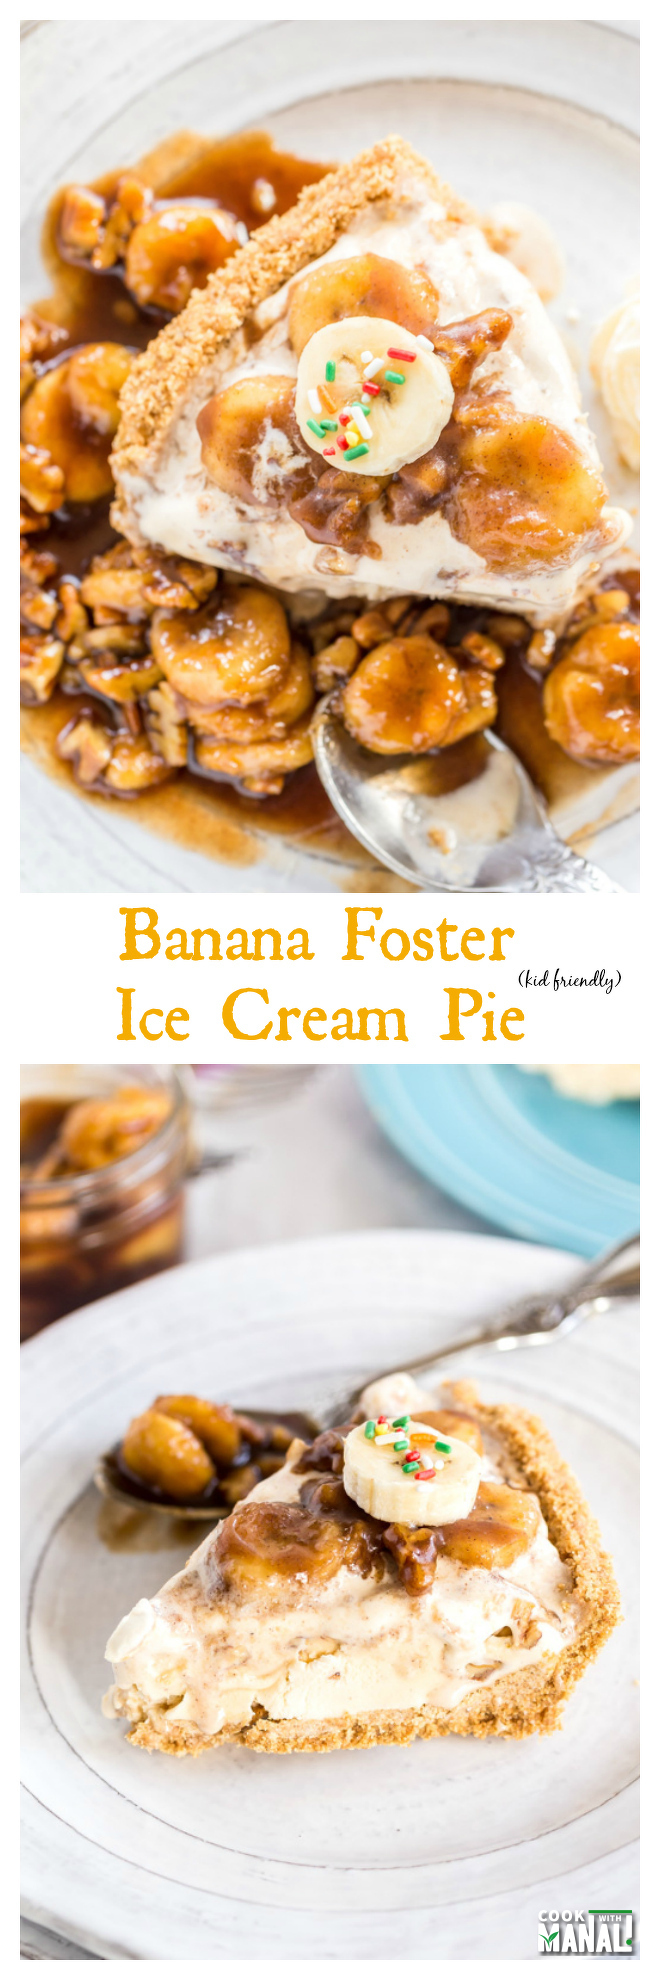 Banana Foster Ice Cream Pie Collage